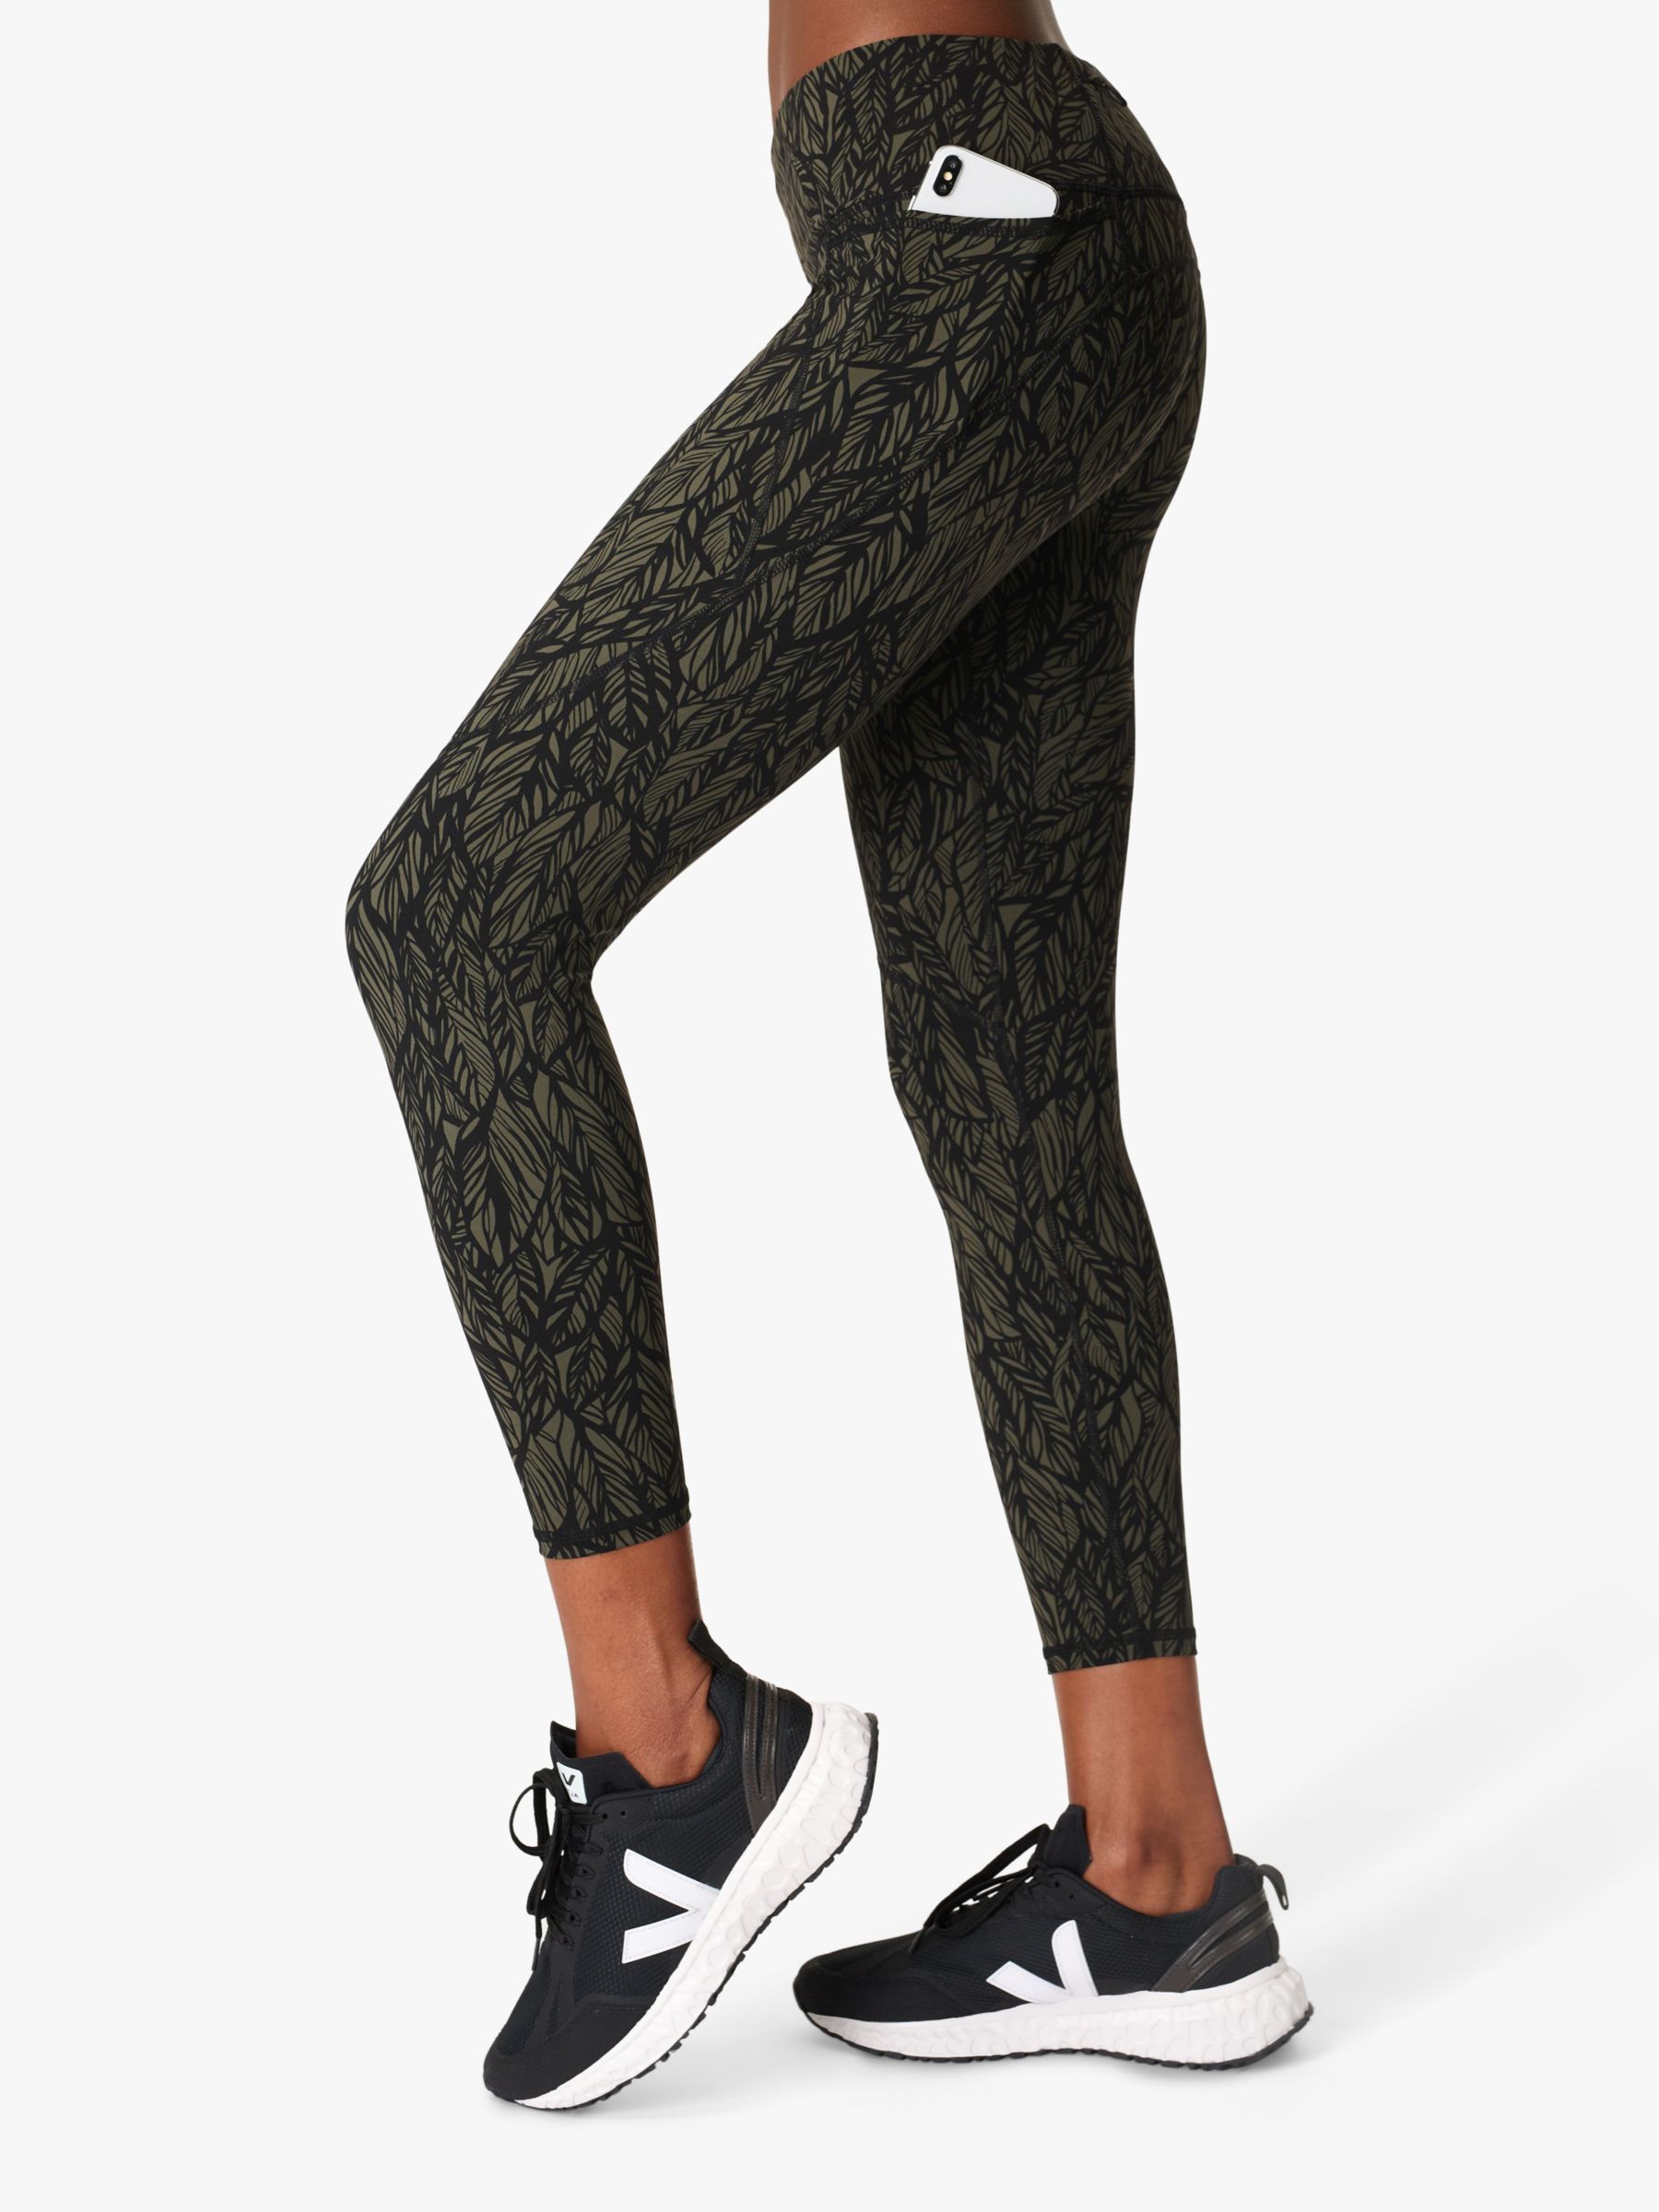 Sweaty Betty Women's Super Soft Yoga Legging in Black Leaf Print Size SMALL